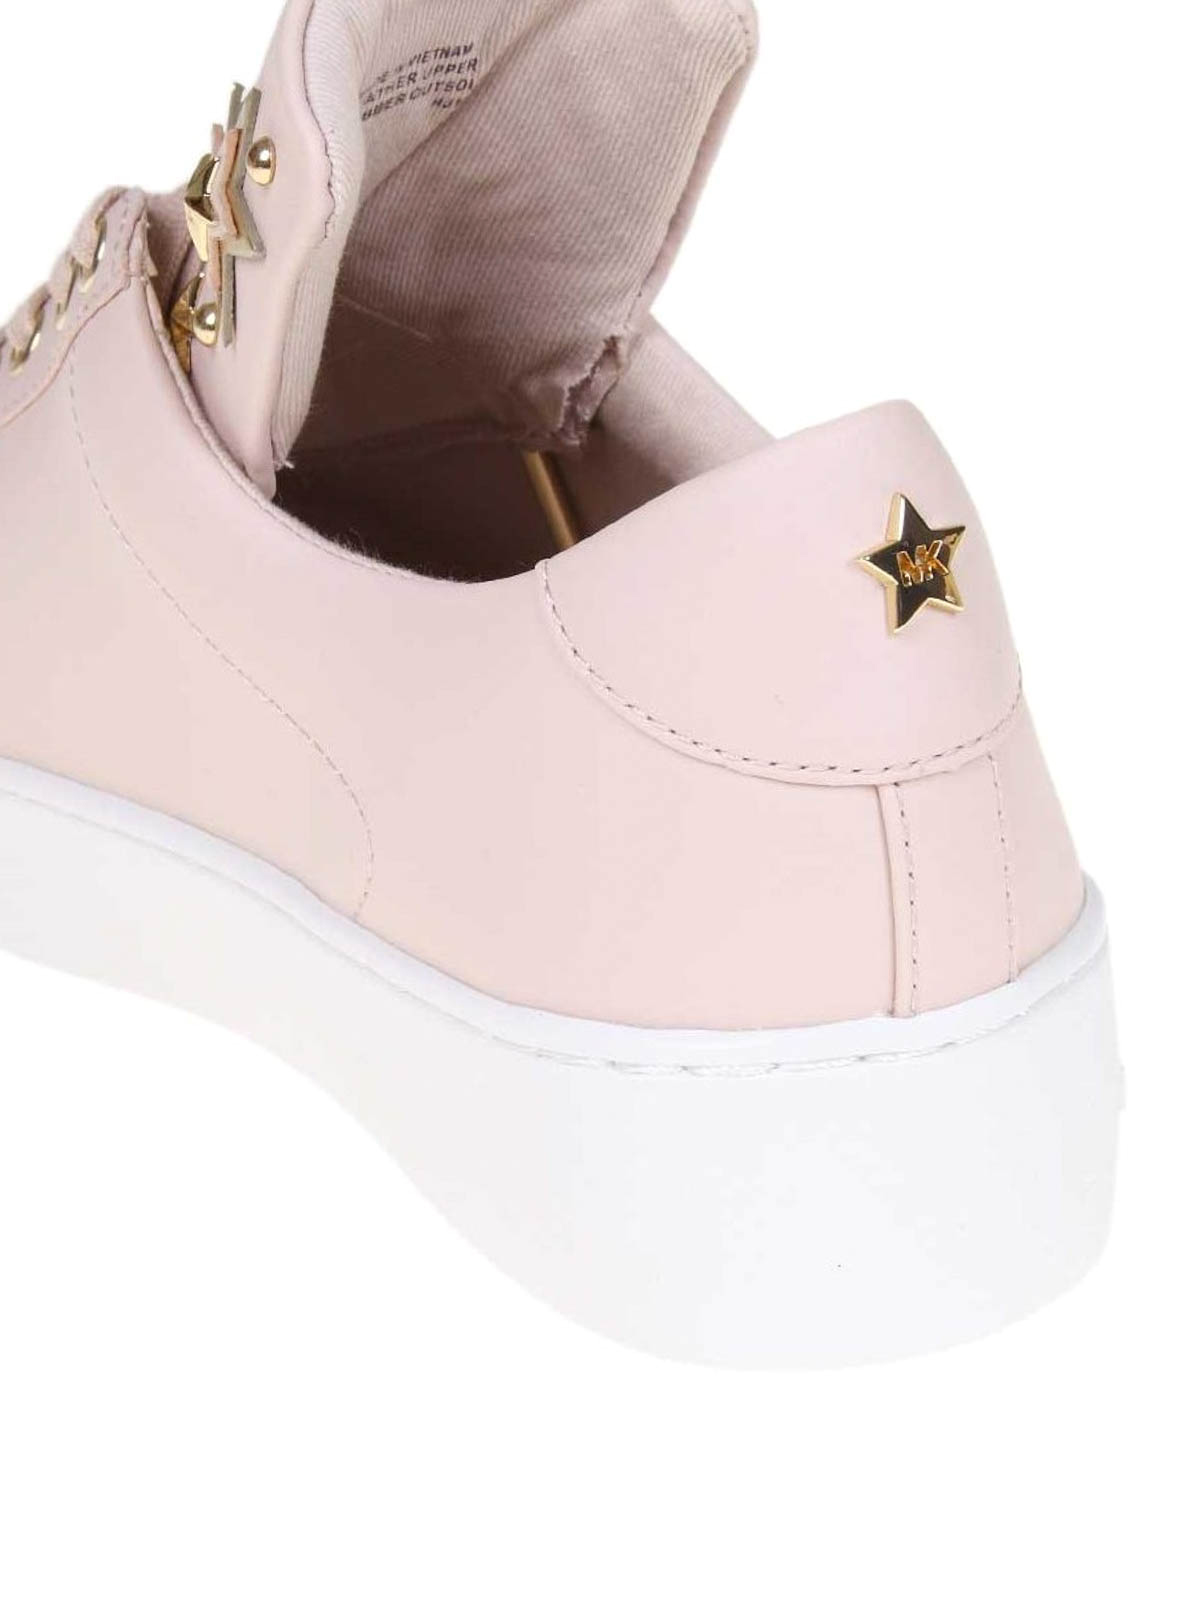 michael kors light pink shoes